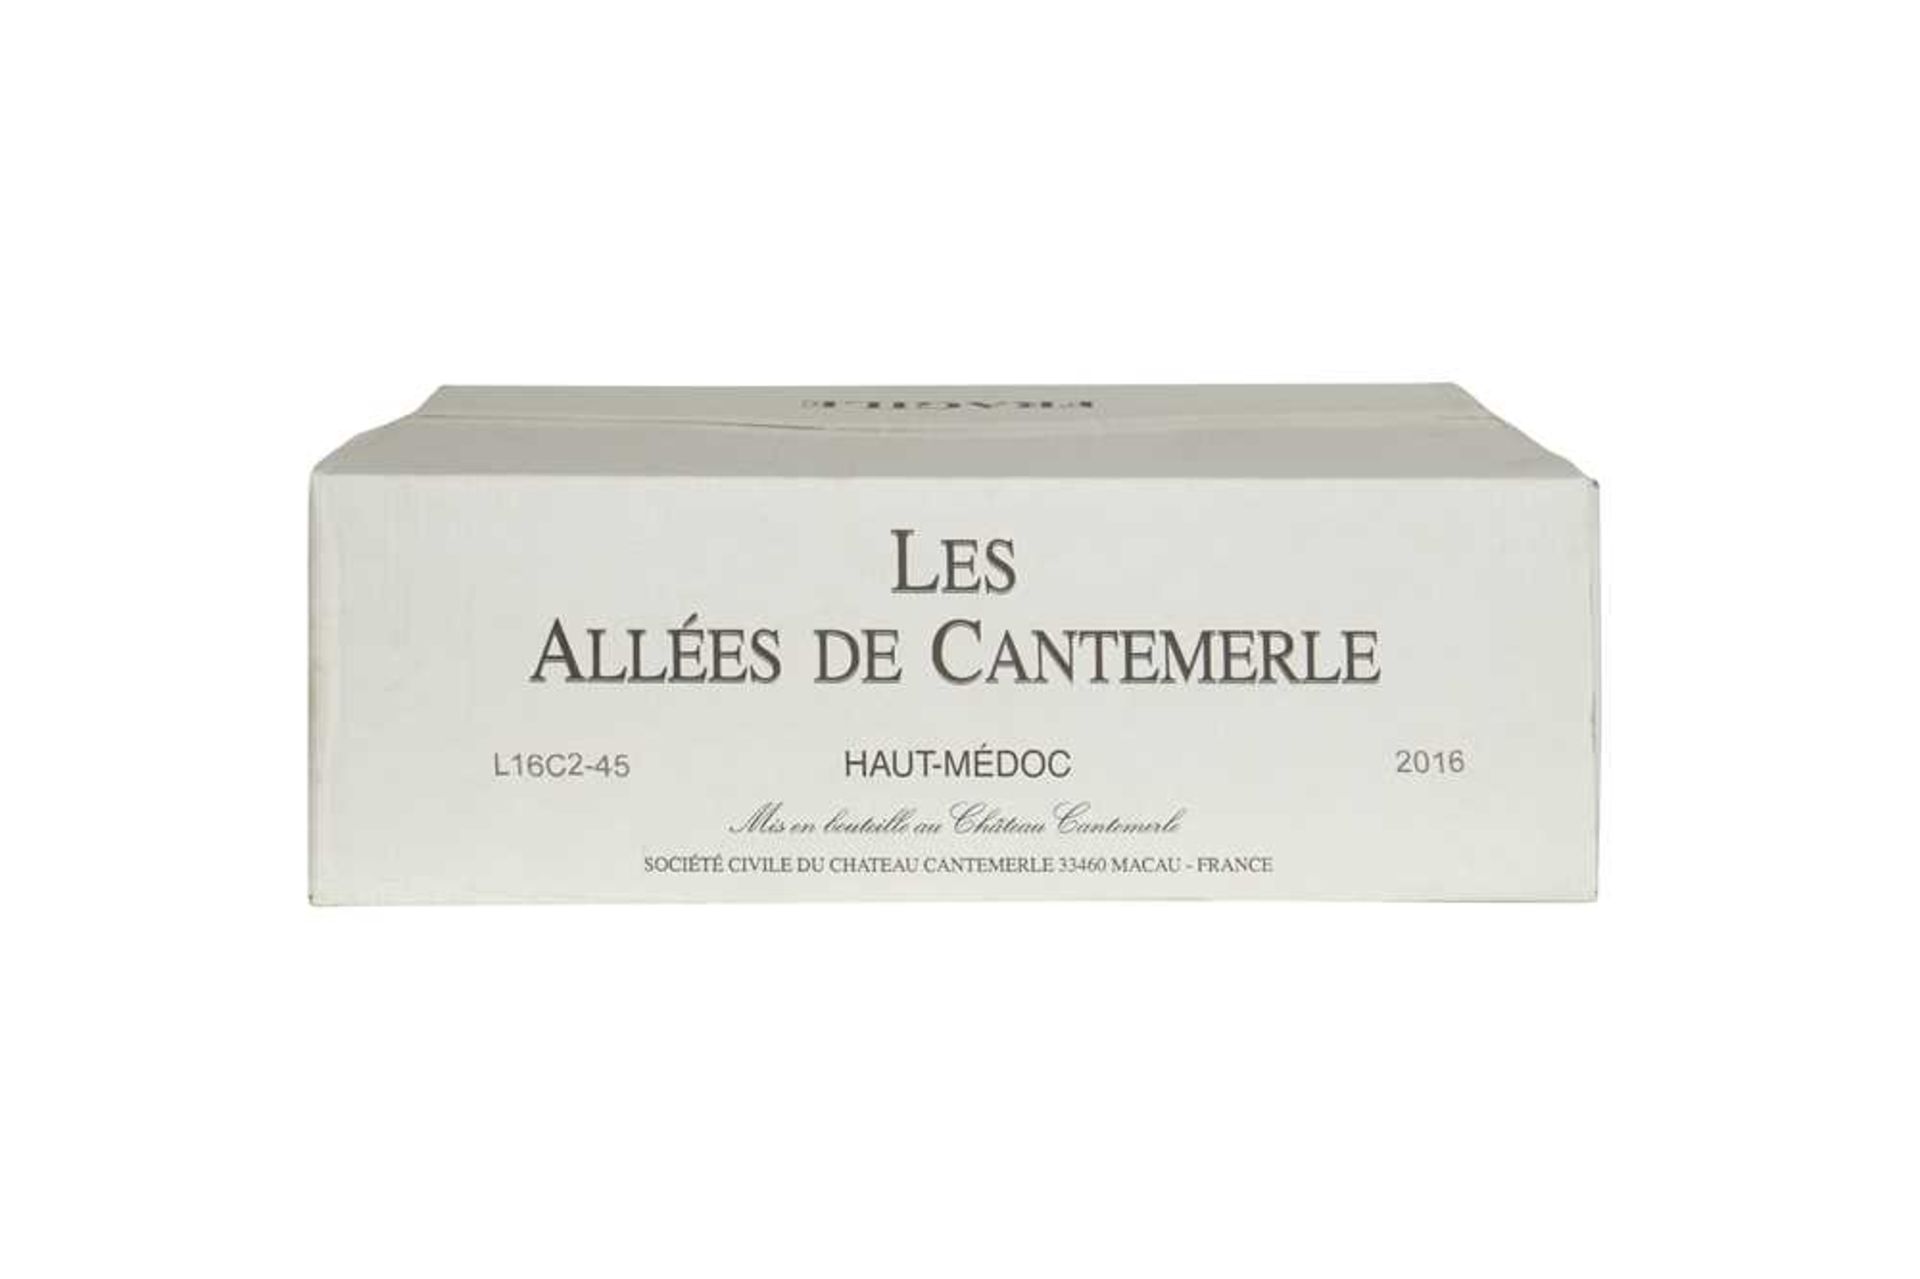 † Les Allees de Cantemerle, 2nd Wine of Chateau Cantemerle, Haut Medoc, 2016 twelve bottles (OCC)